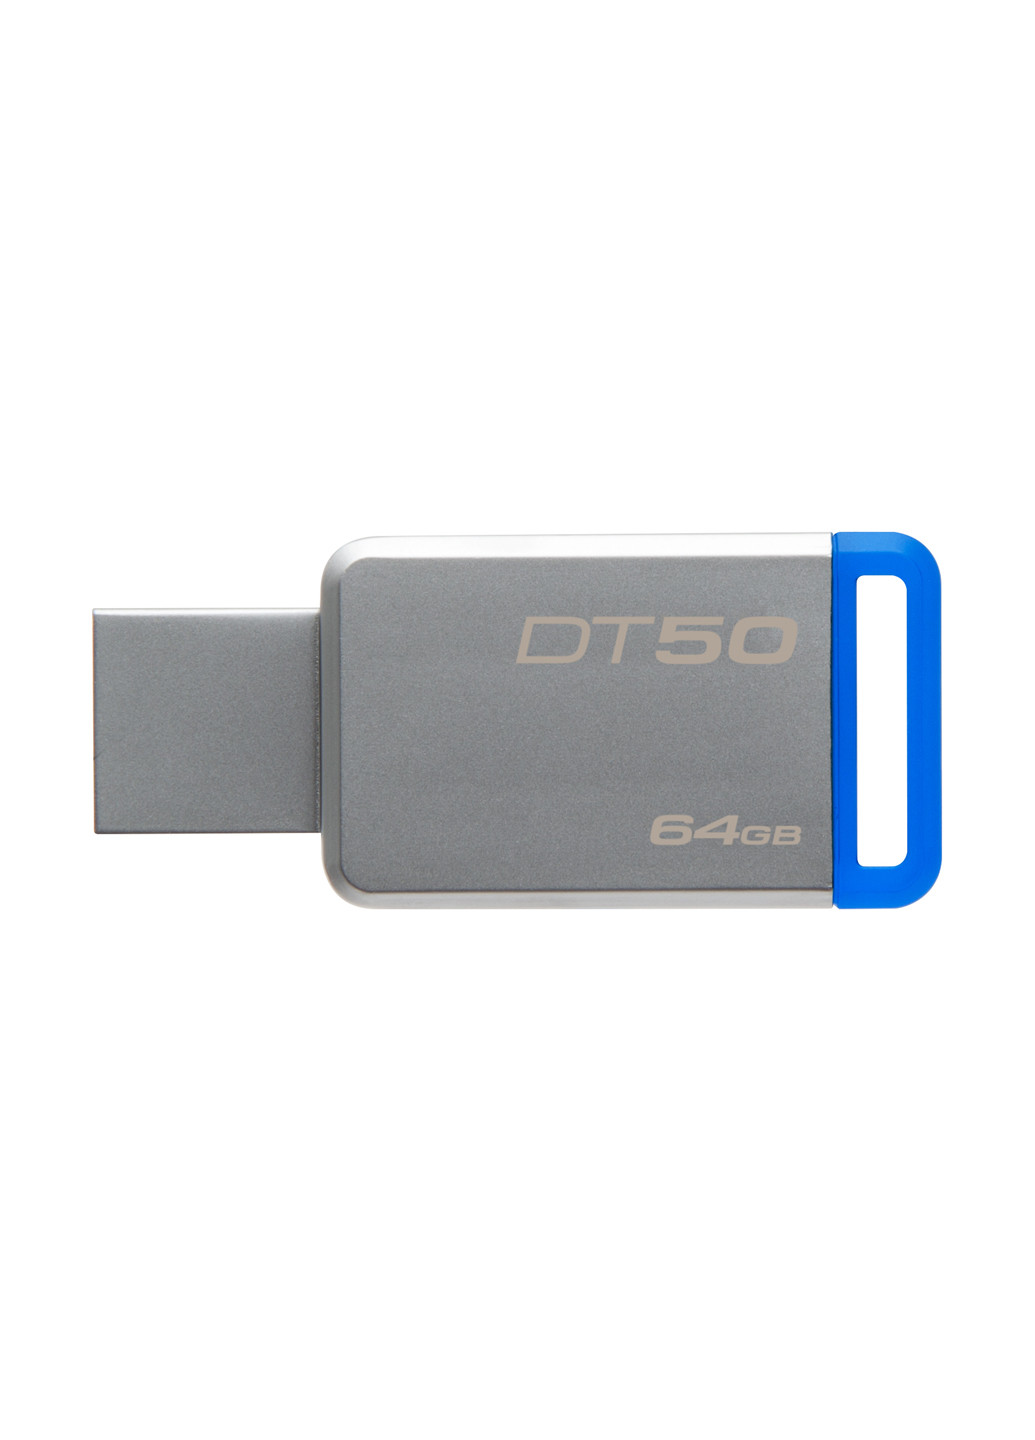 Флеш память USB DataTraveler 50 64GB Blue (DT50/64GB) Kingston флеш память usb kingston datatraveler 50 64gb blue (dt50/64gb) (134201722)